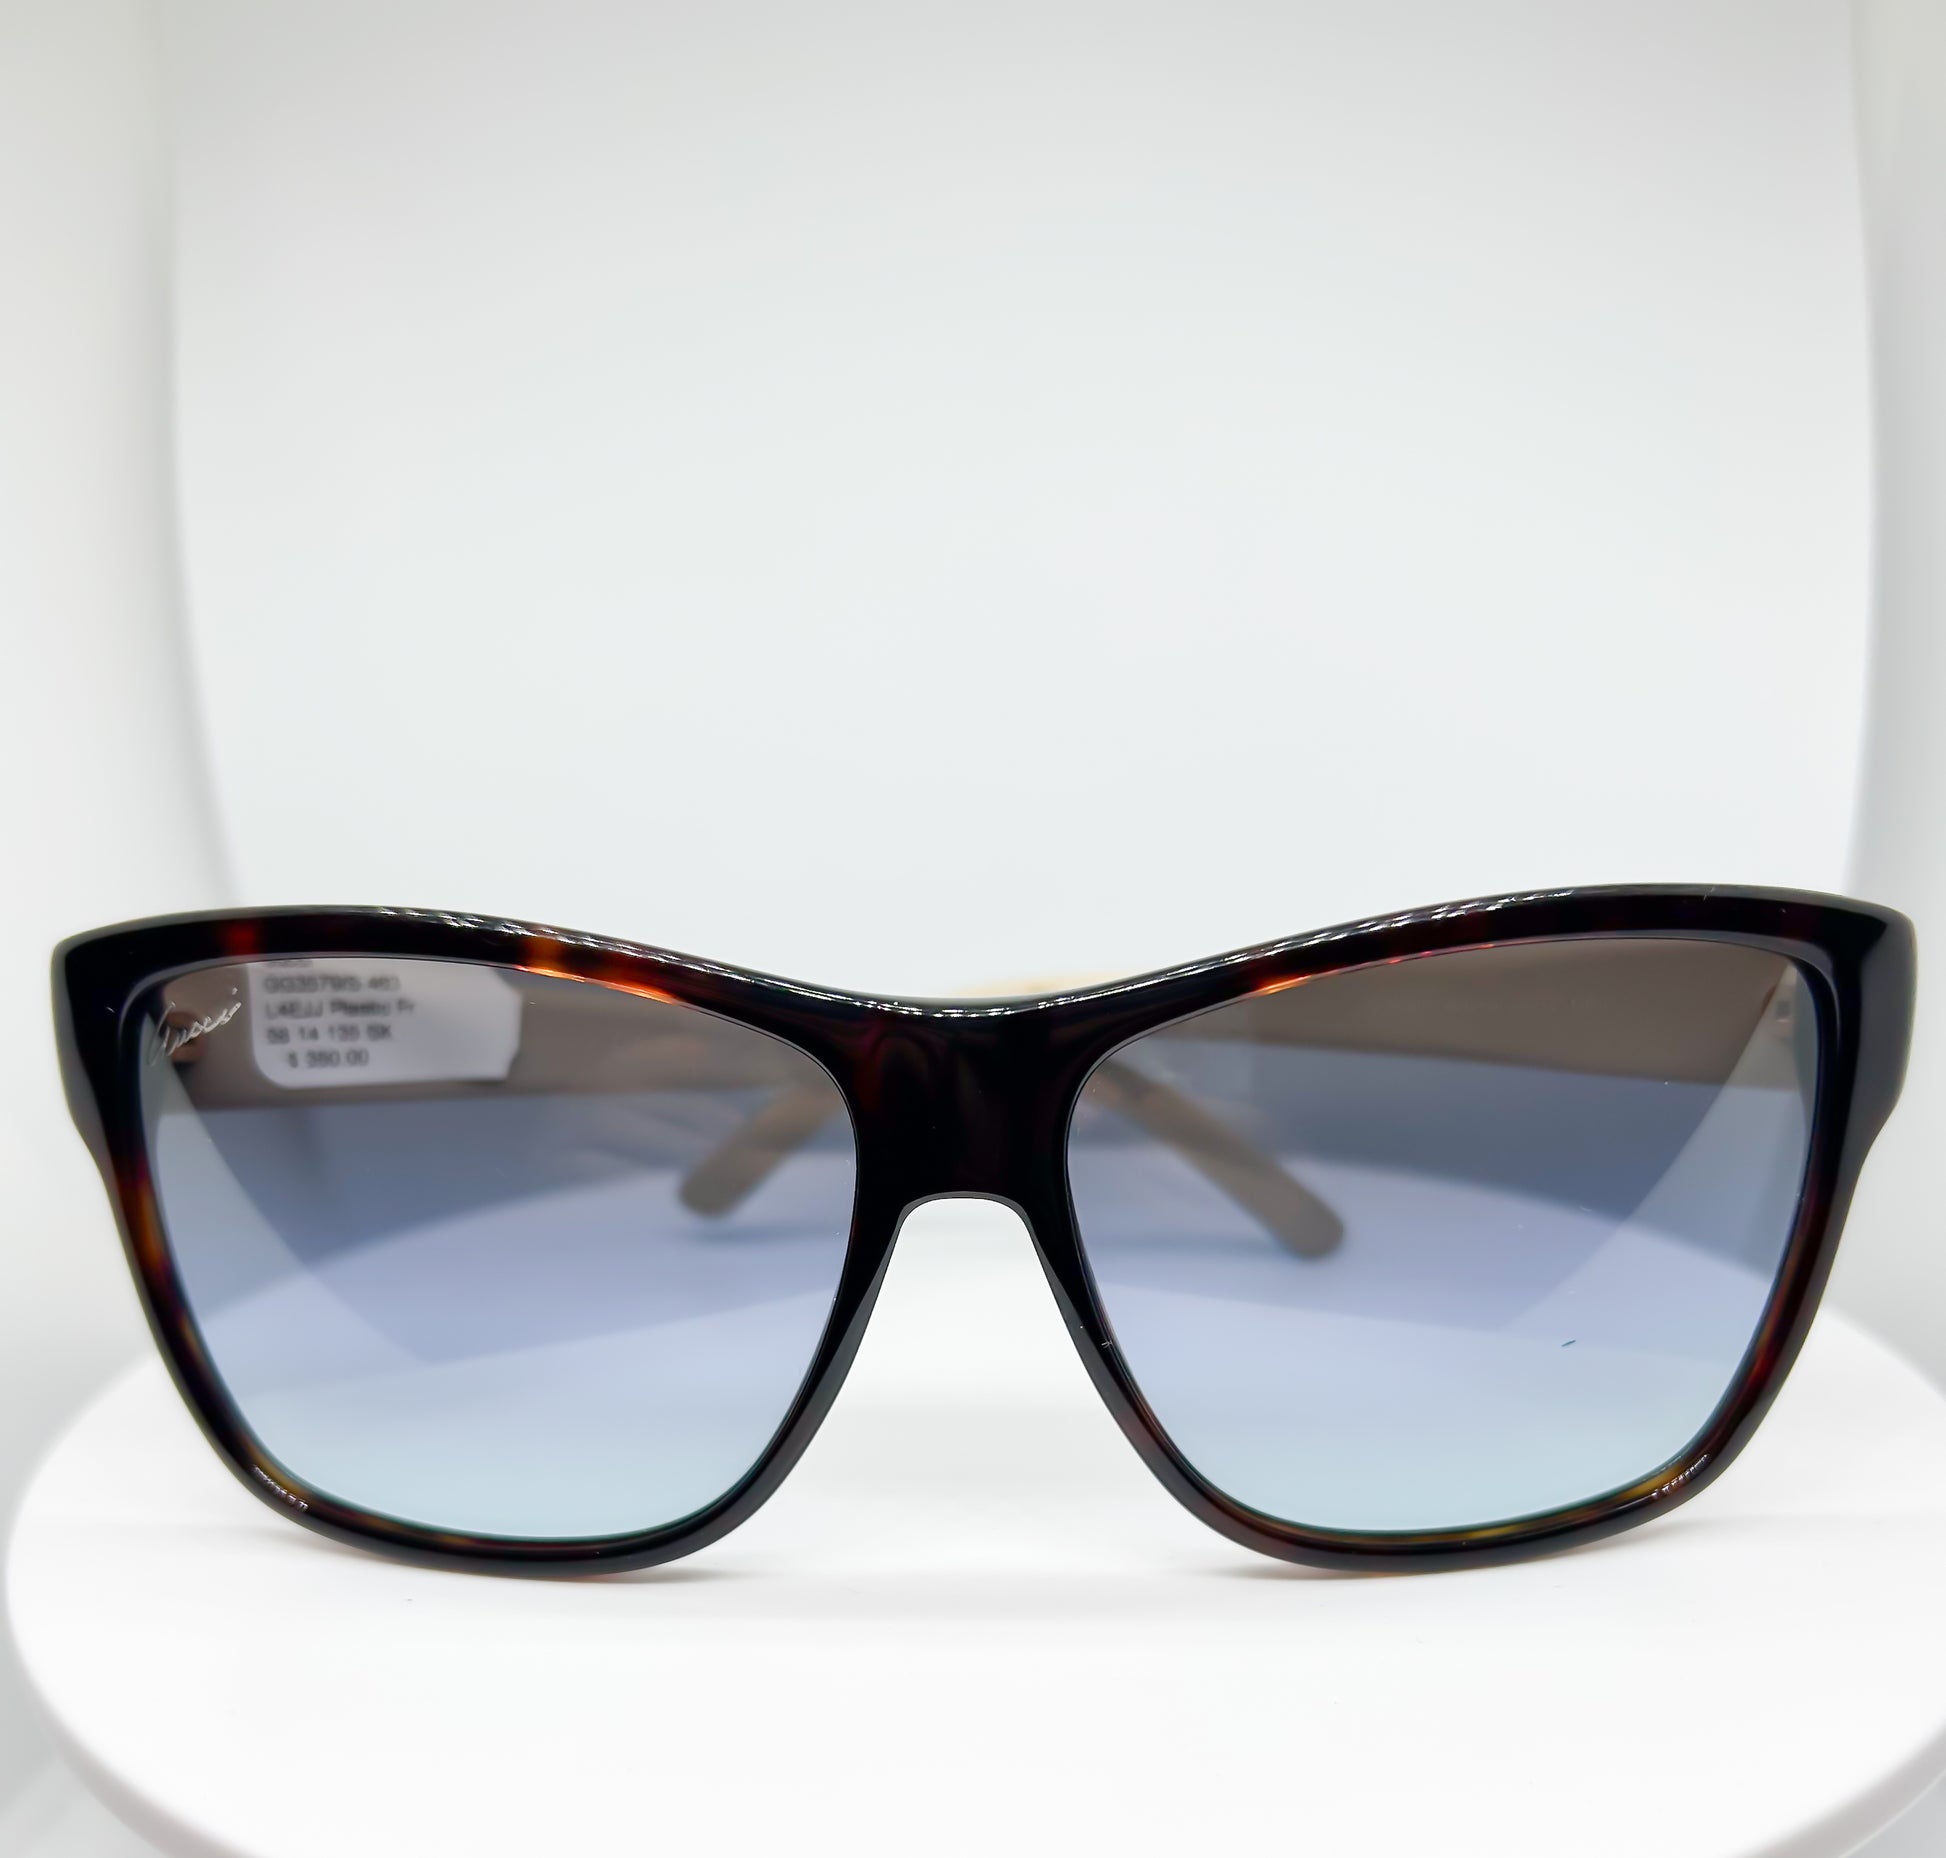 Gucci GG3579/S Women  Sunglasses Frame Sunglasses Eyewear from Adair Eyewear - Over 40 years of customer service excellence